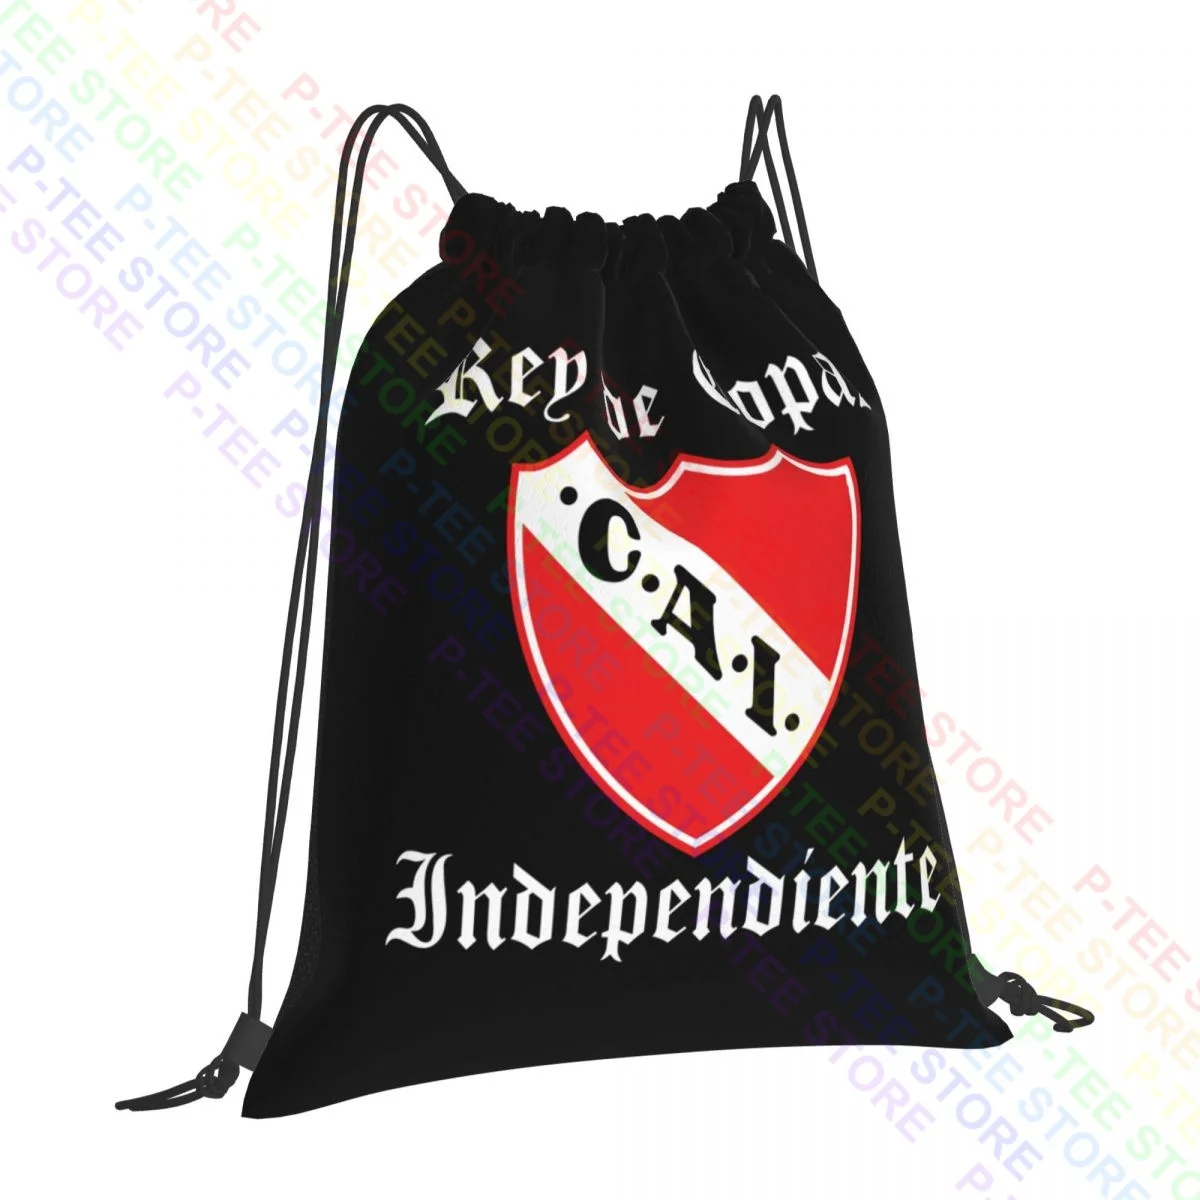 Argentina Club Atlético Independiente Banner Custom car banners 1.5*5ft  (45*150cm) Advertise Dec Indoor Outdoor Flags yhx0538